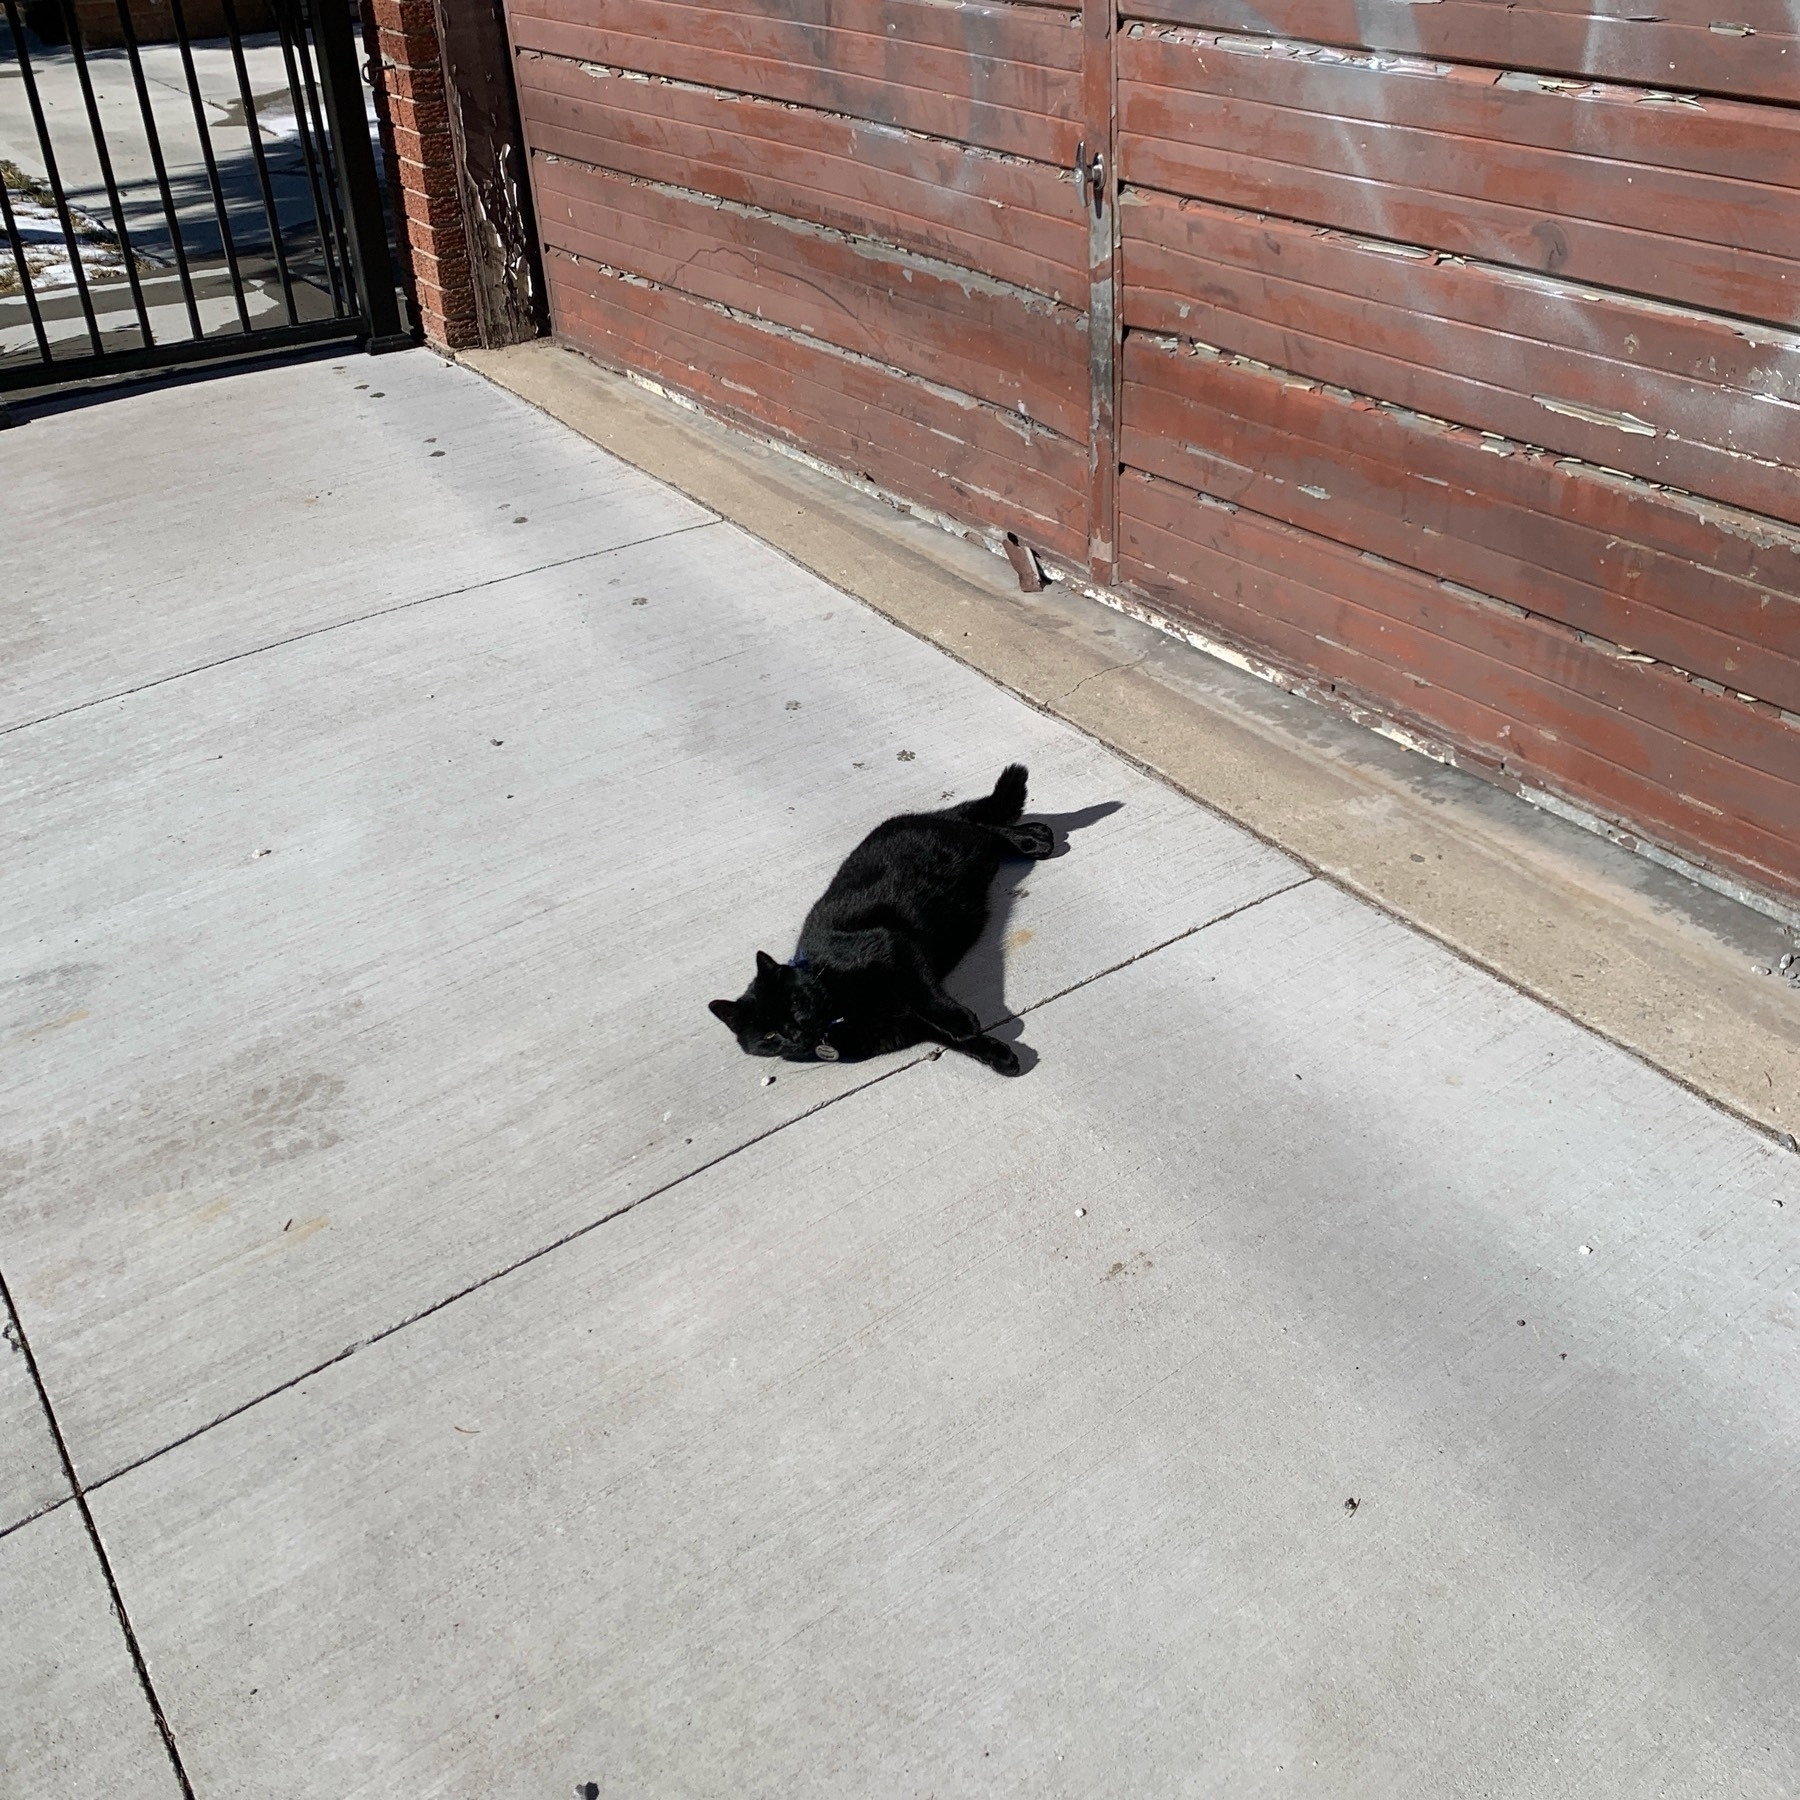 A random black cat sunbathing on a sunny winter day in Toronto.